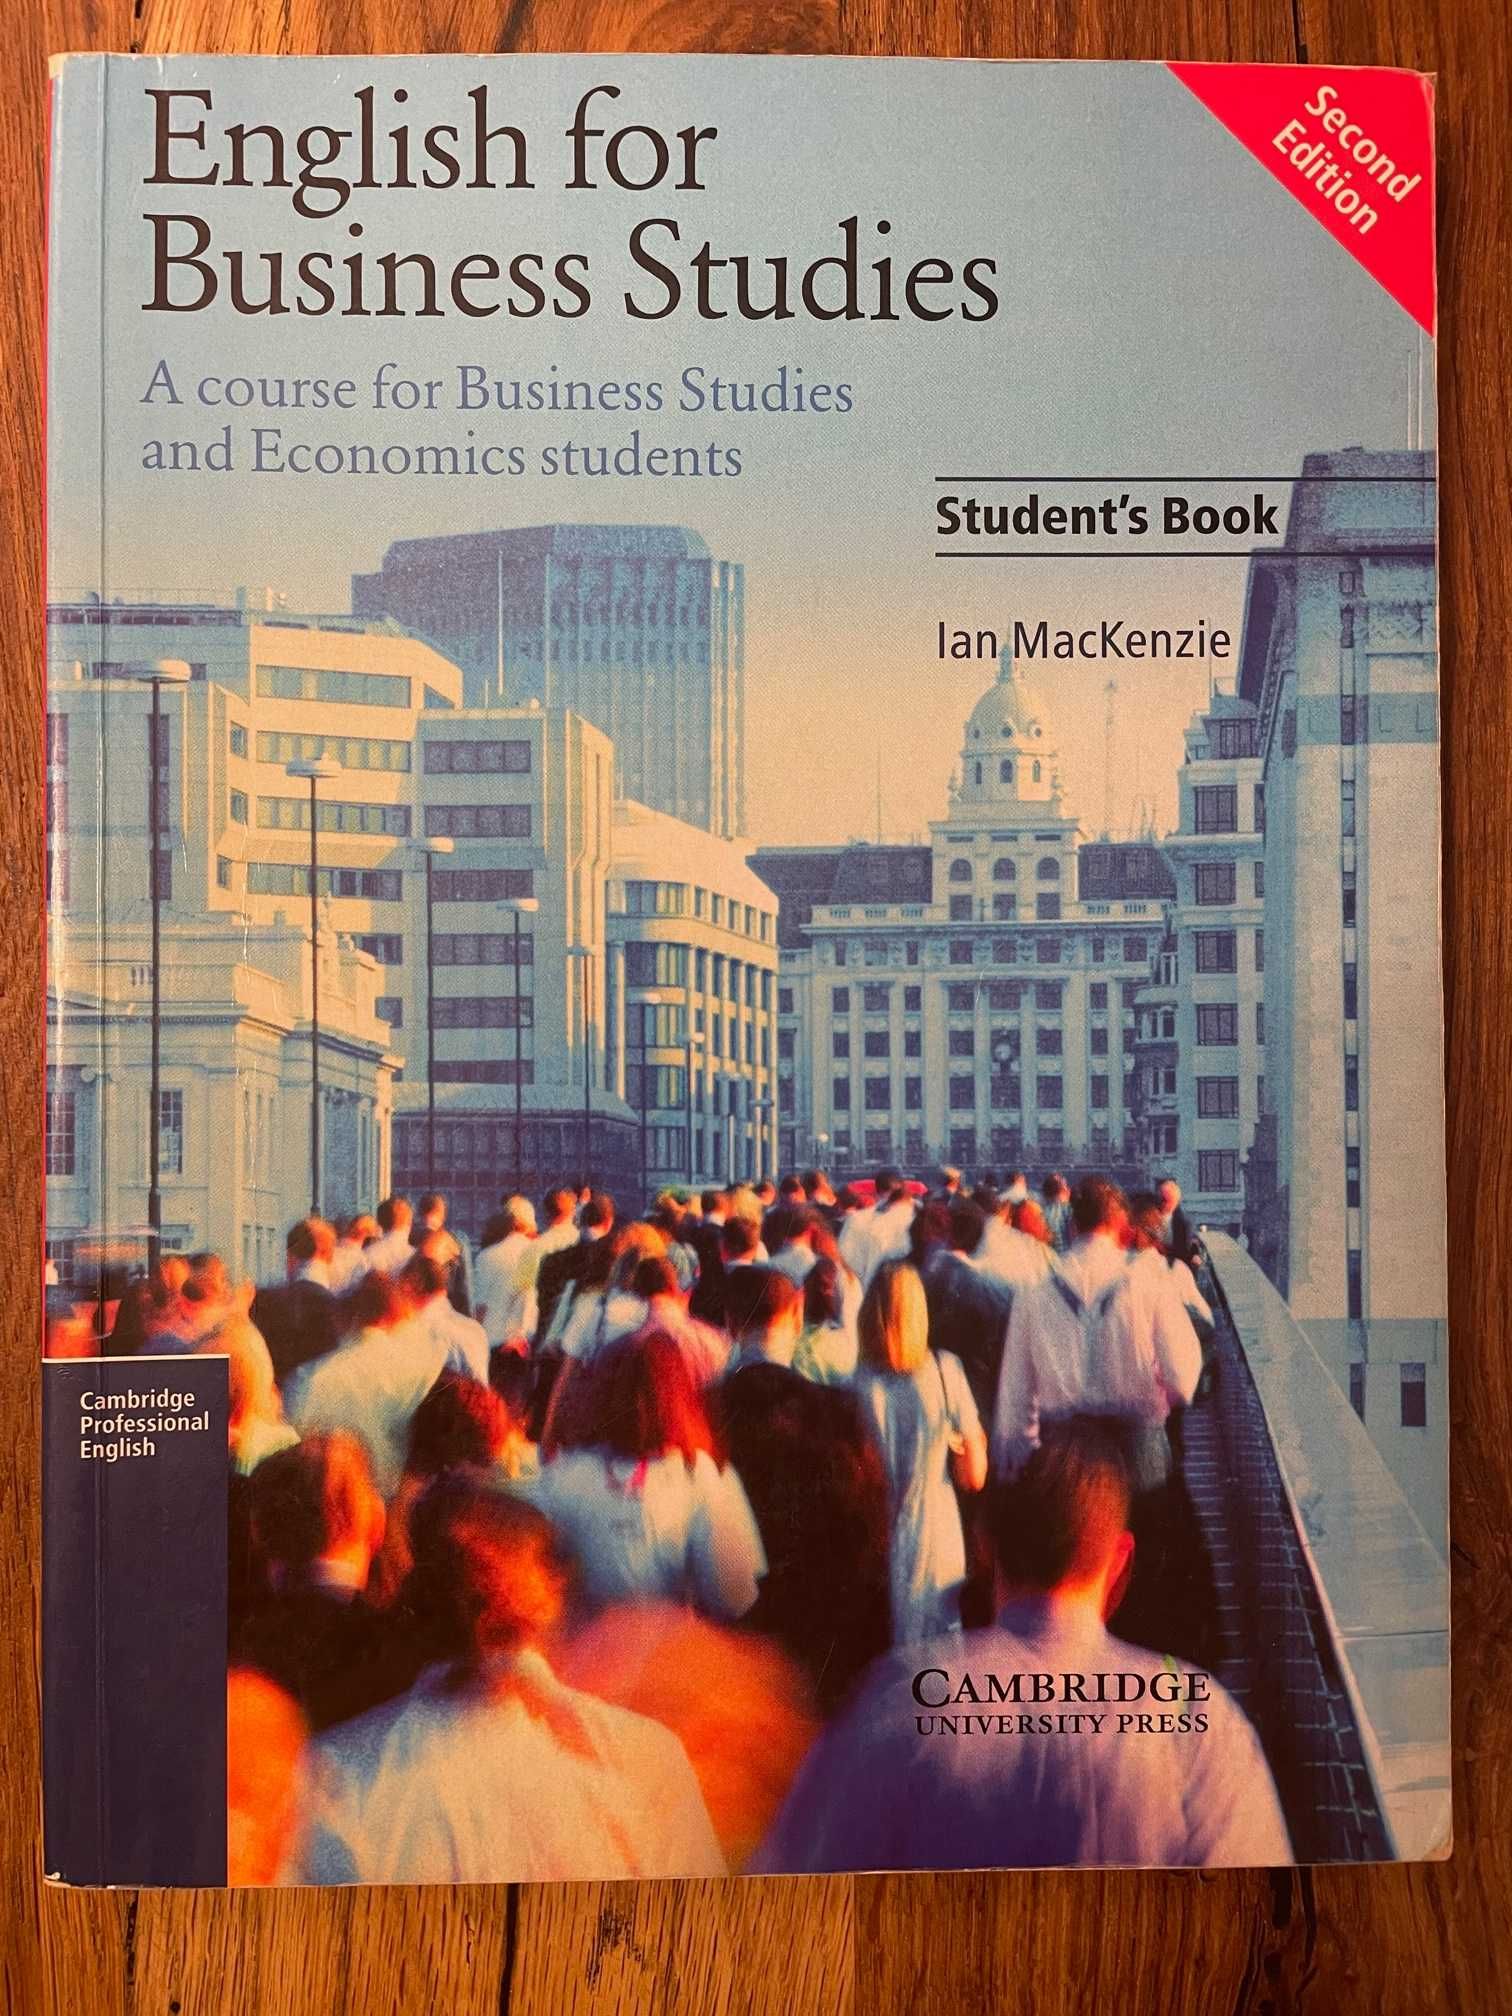 English for business studies Ian MacKenzie 2004